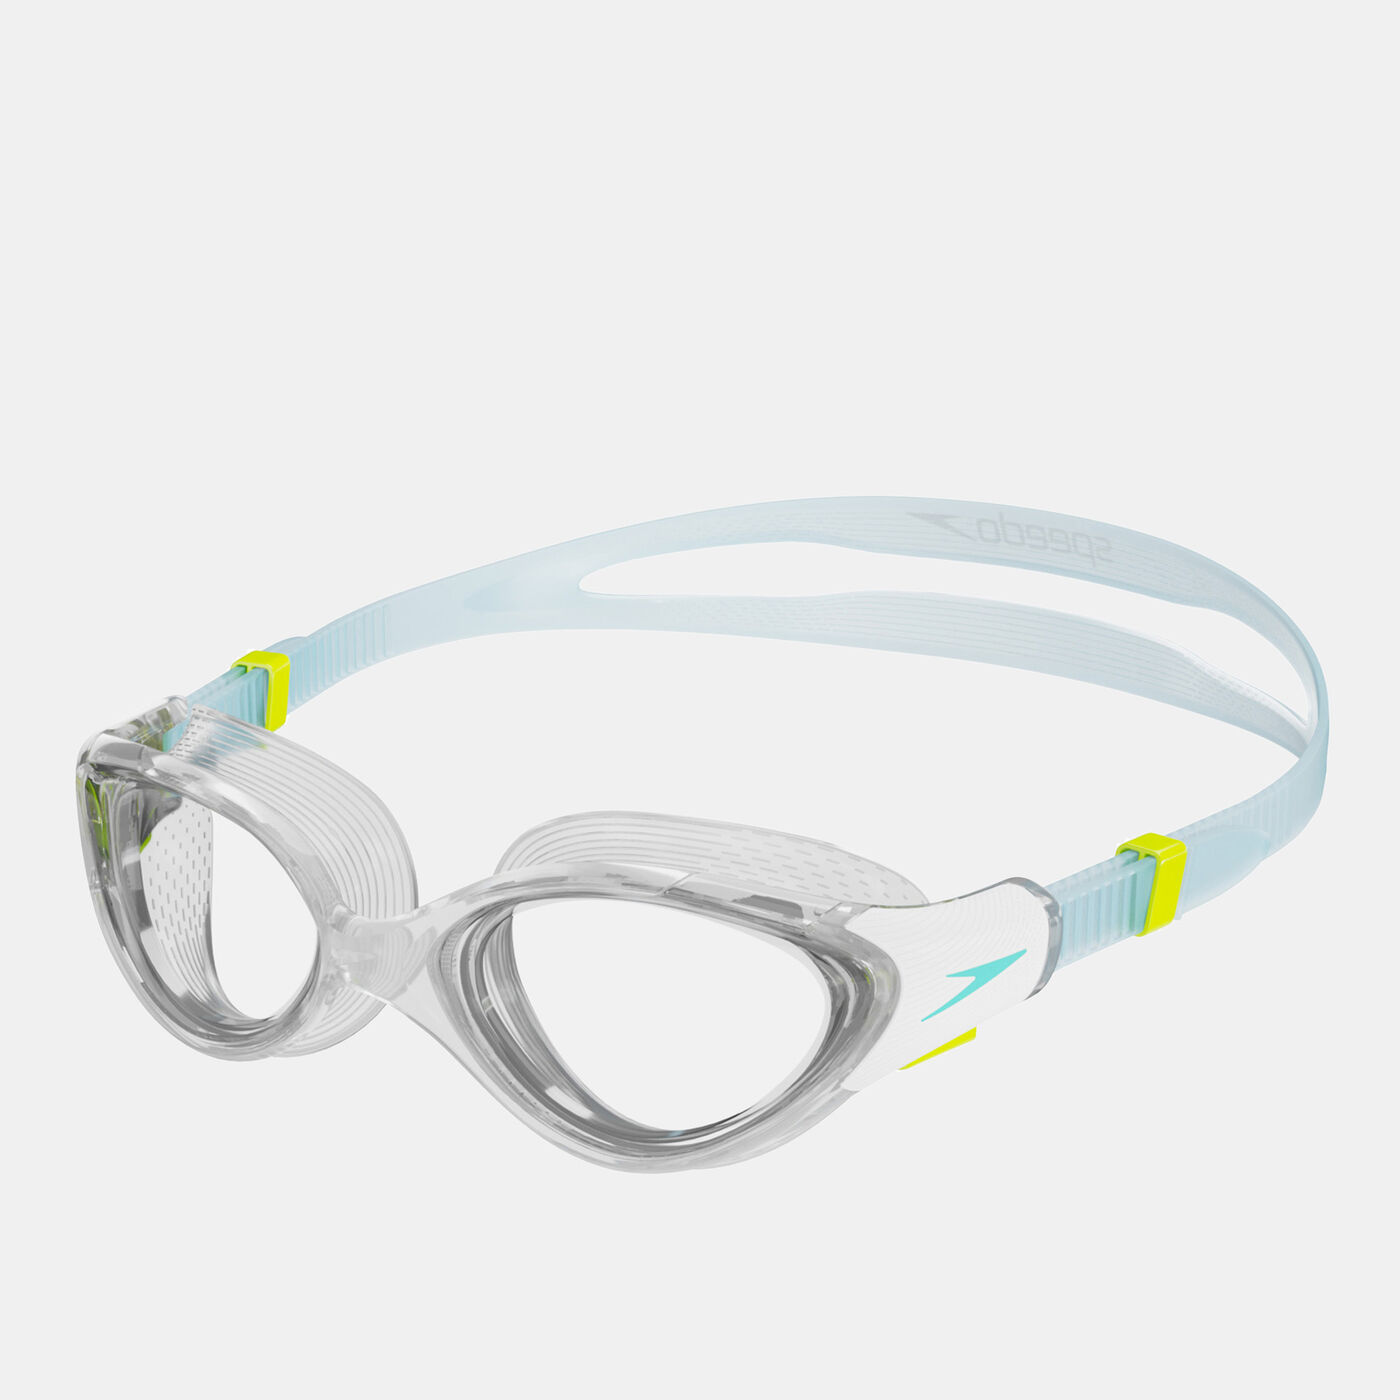 Women's Biofuse 2.0 Swimming Goggles